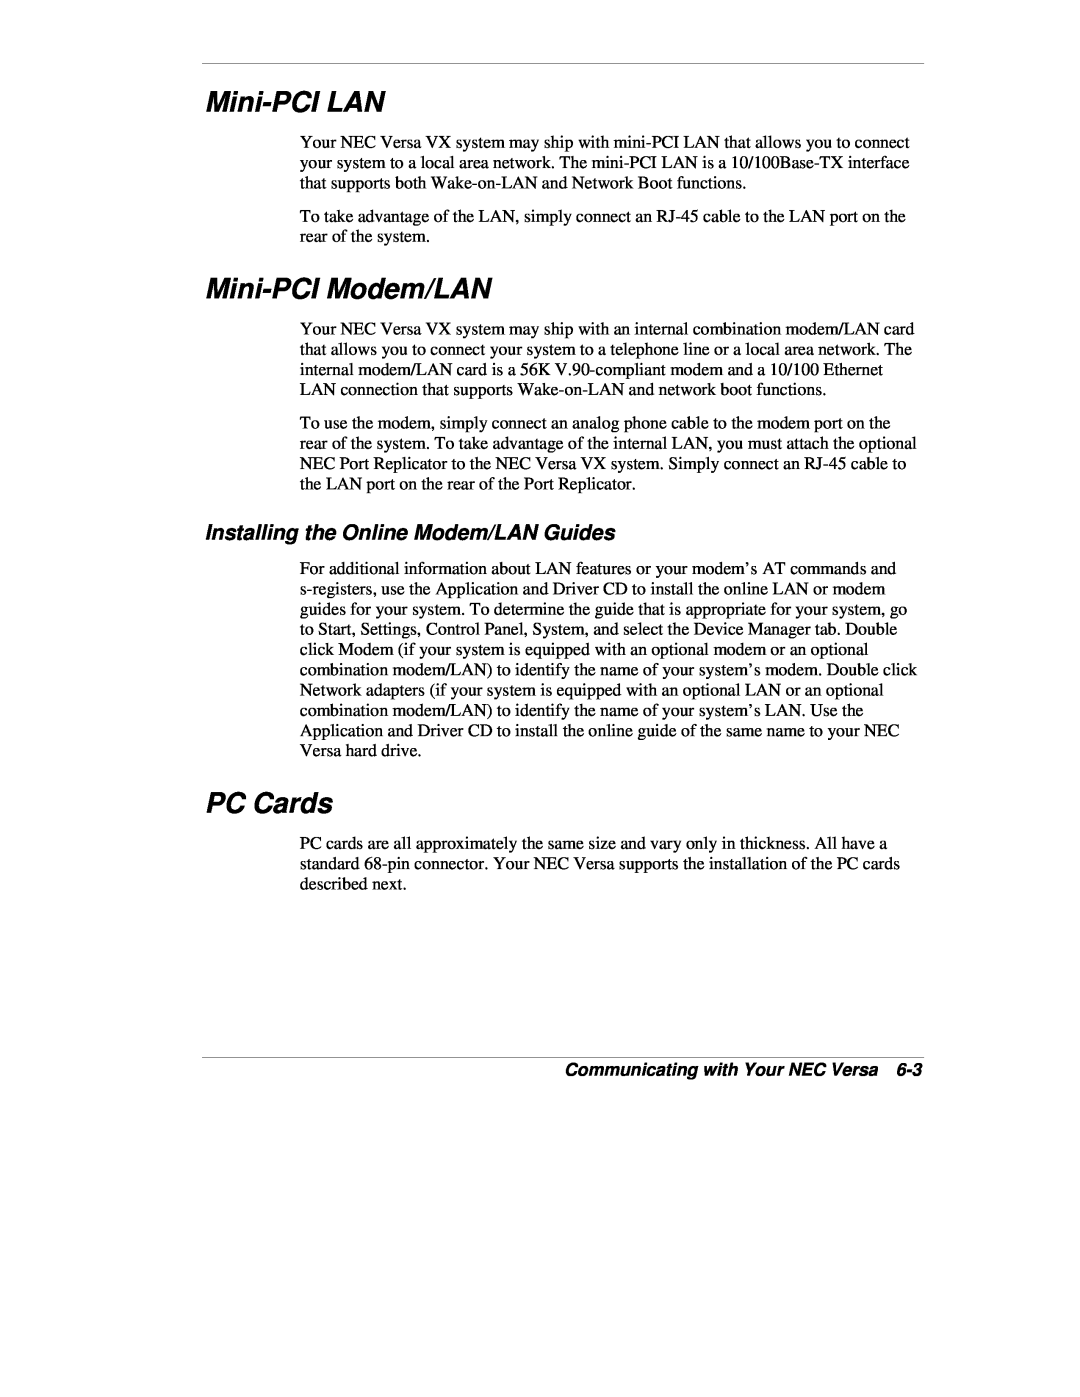 NEC VX manual Mini-PCI LAN, Mini-PCI Modem/LAN, PC Cards, Installing the Online Modem/LAN Guides 